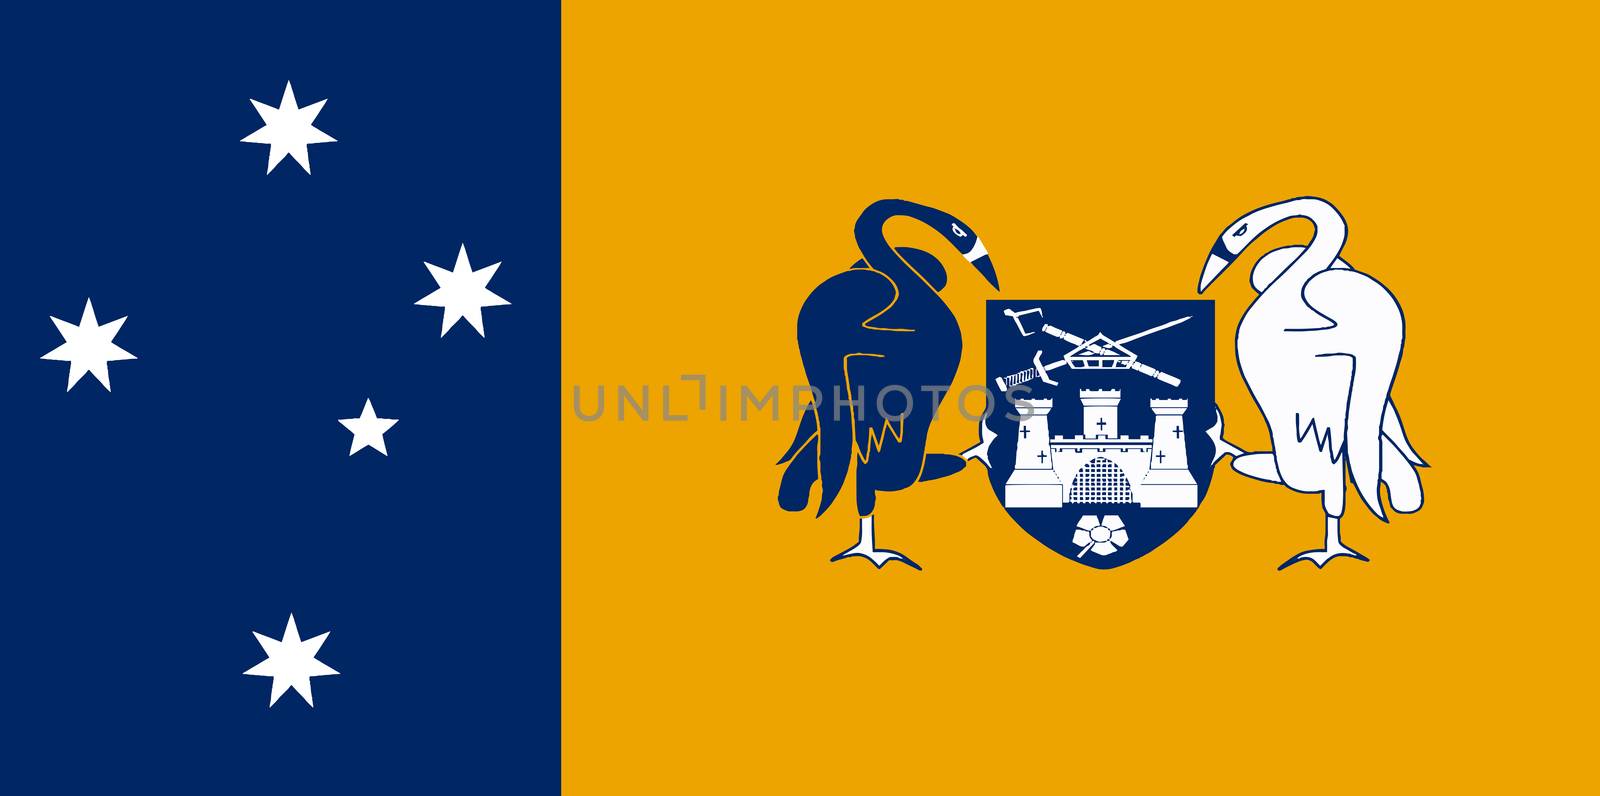 The flag of the Australian Capital Territory